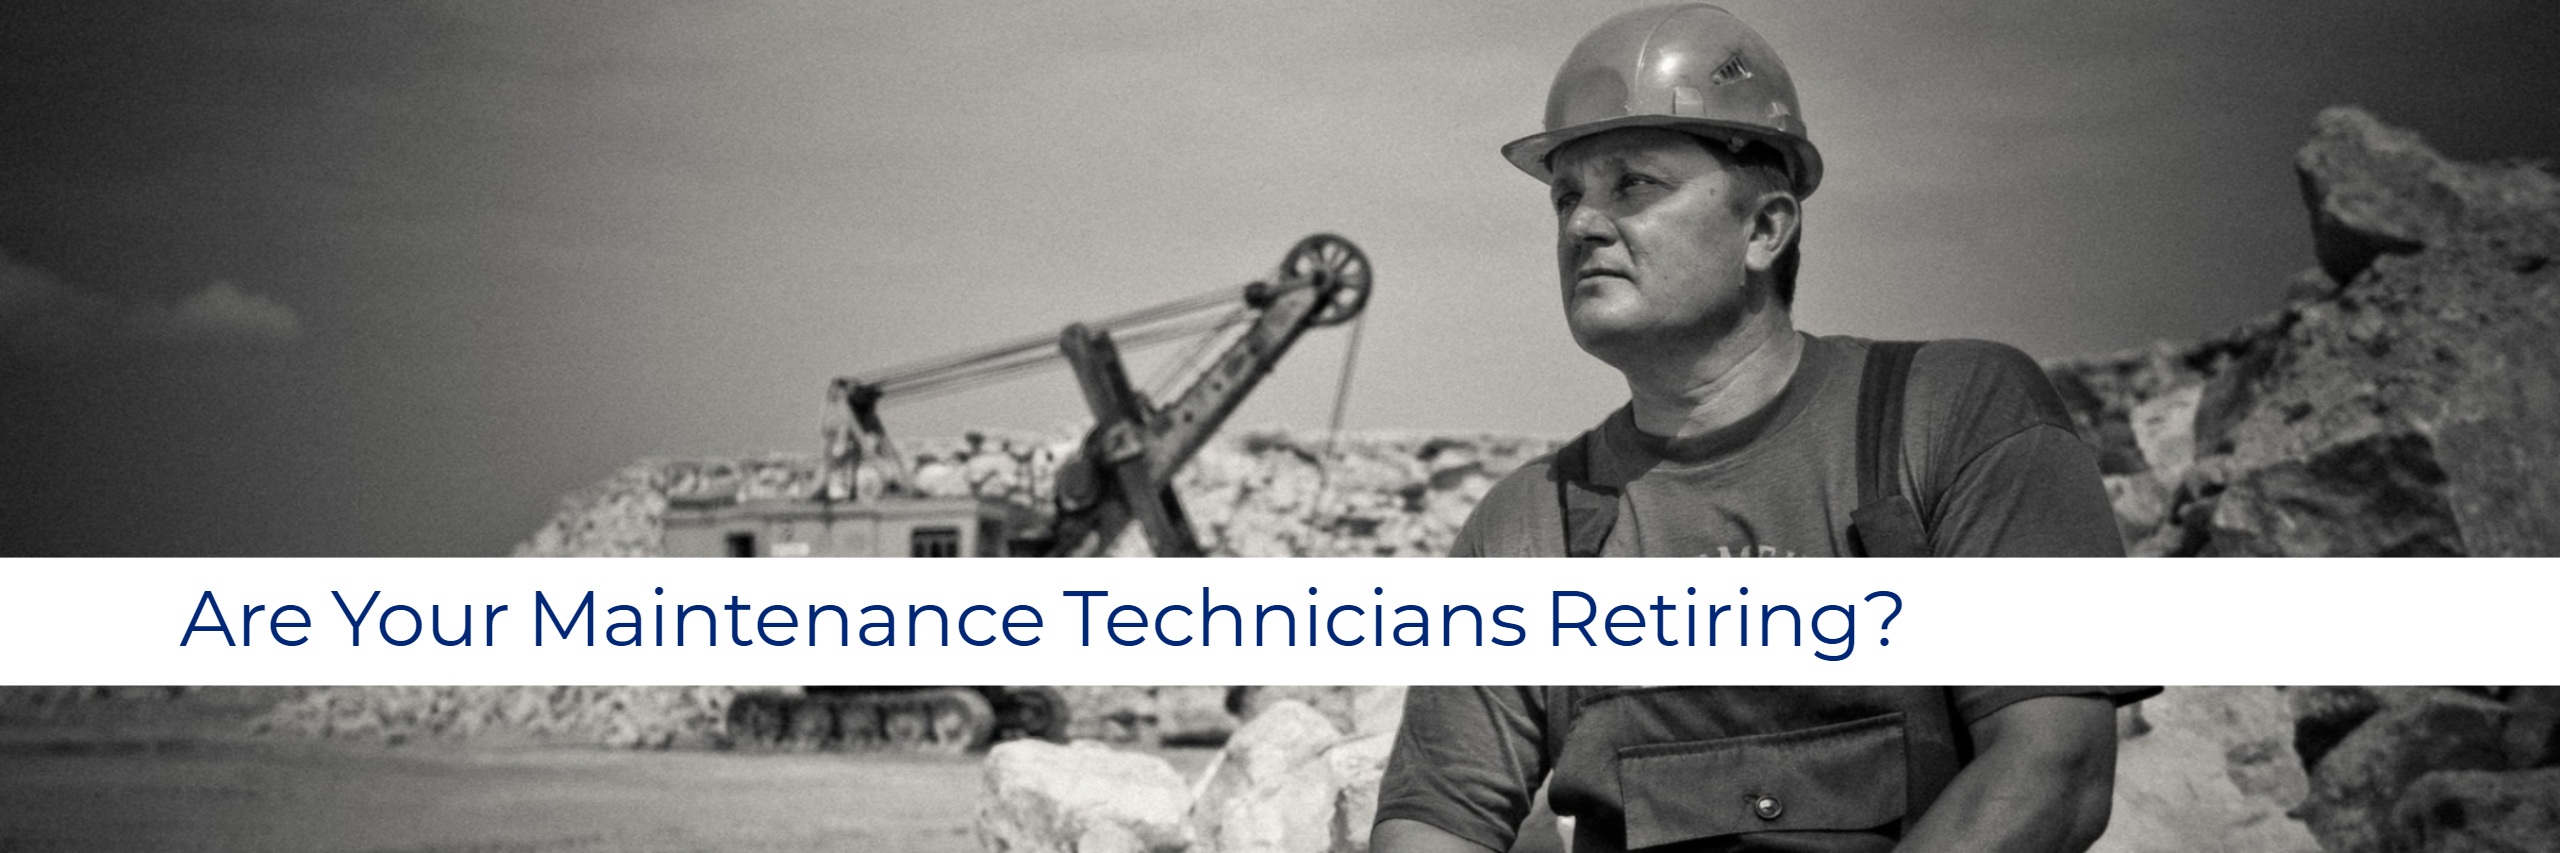 Are Your Maintenance Technicians and Mechanics Retiring?